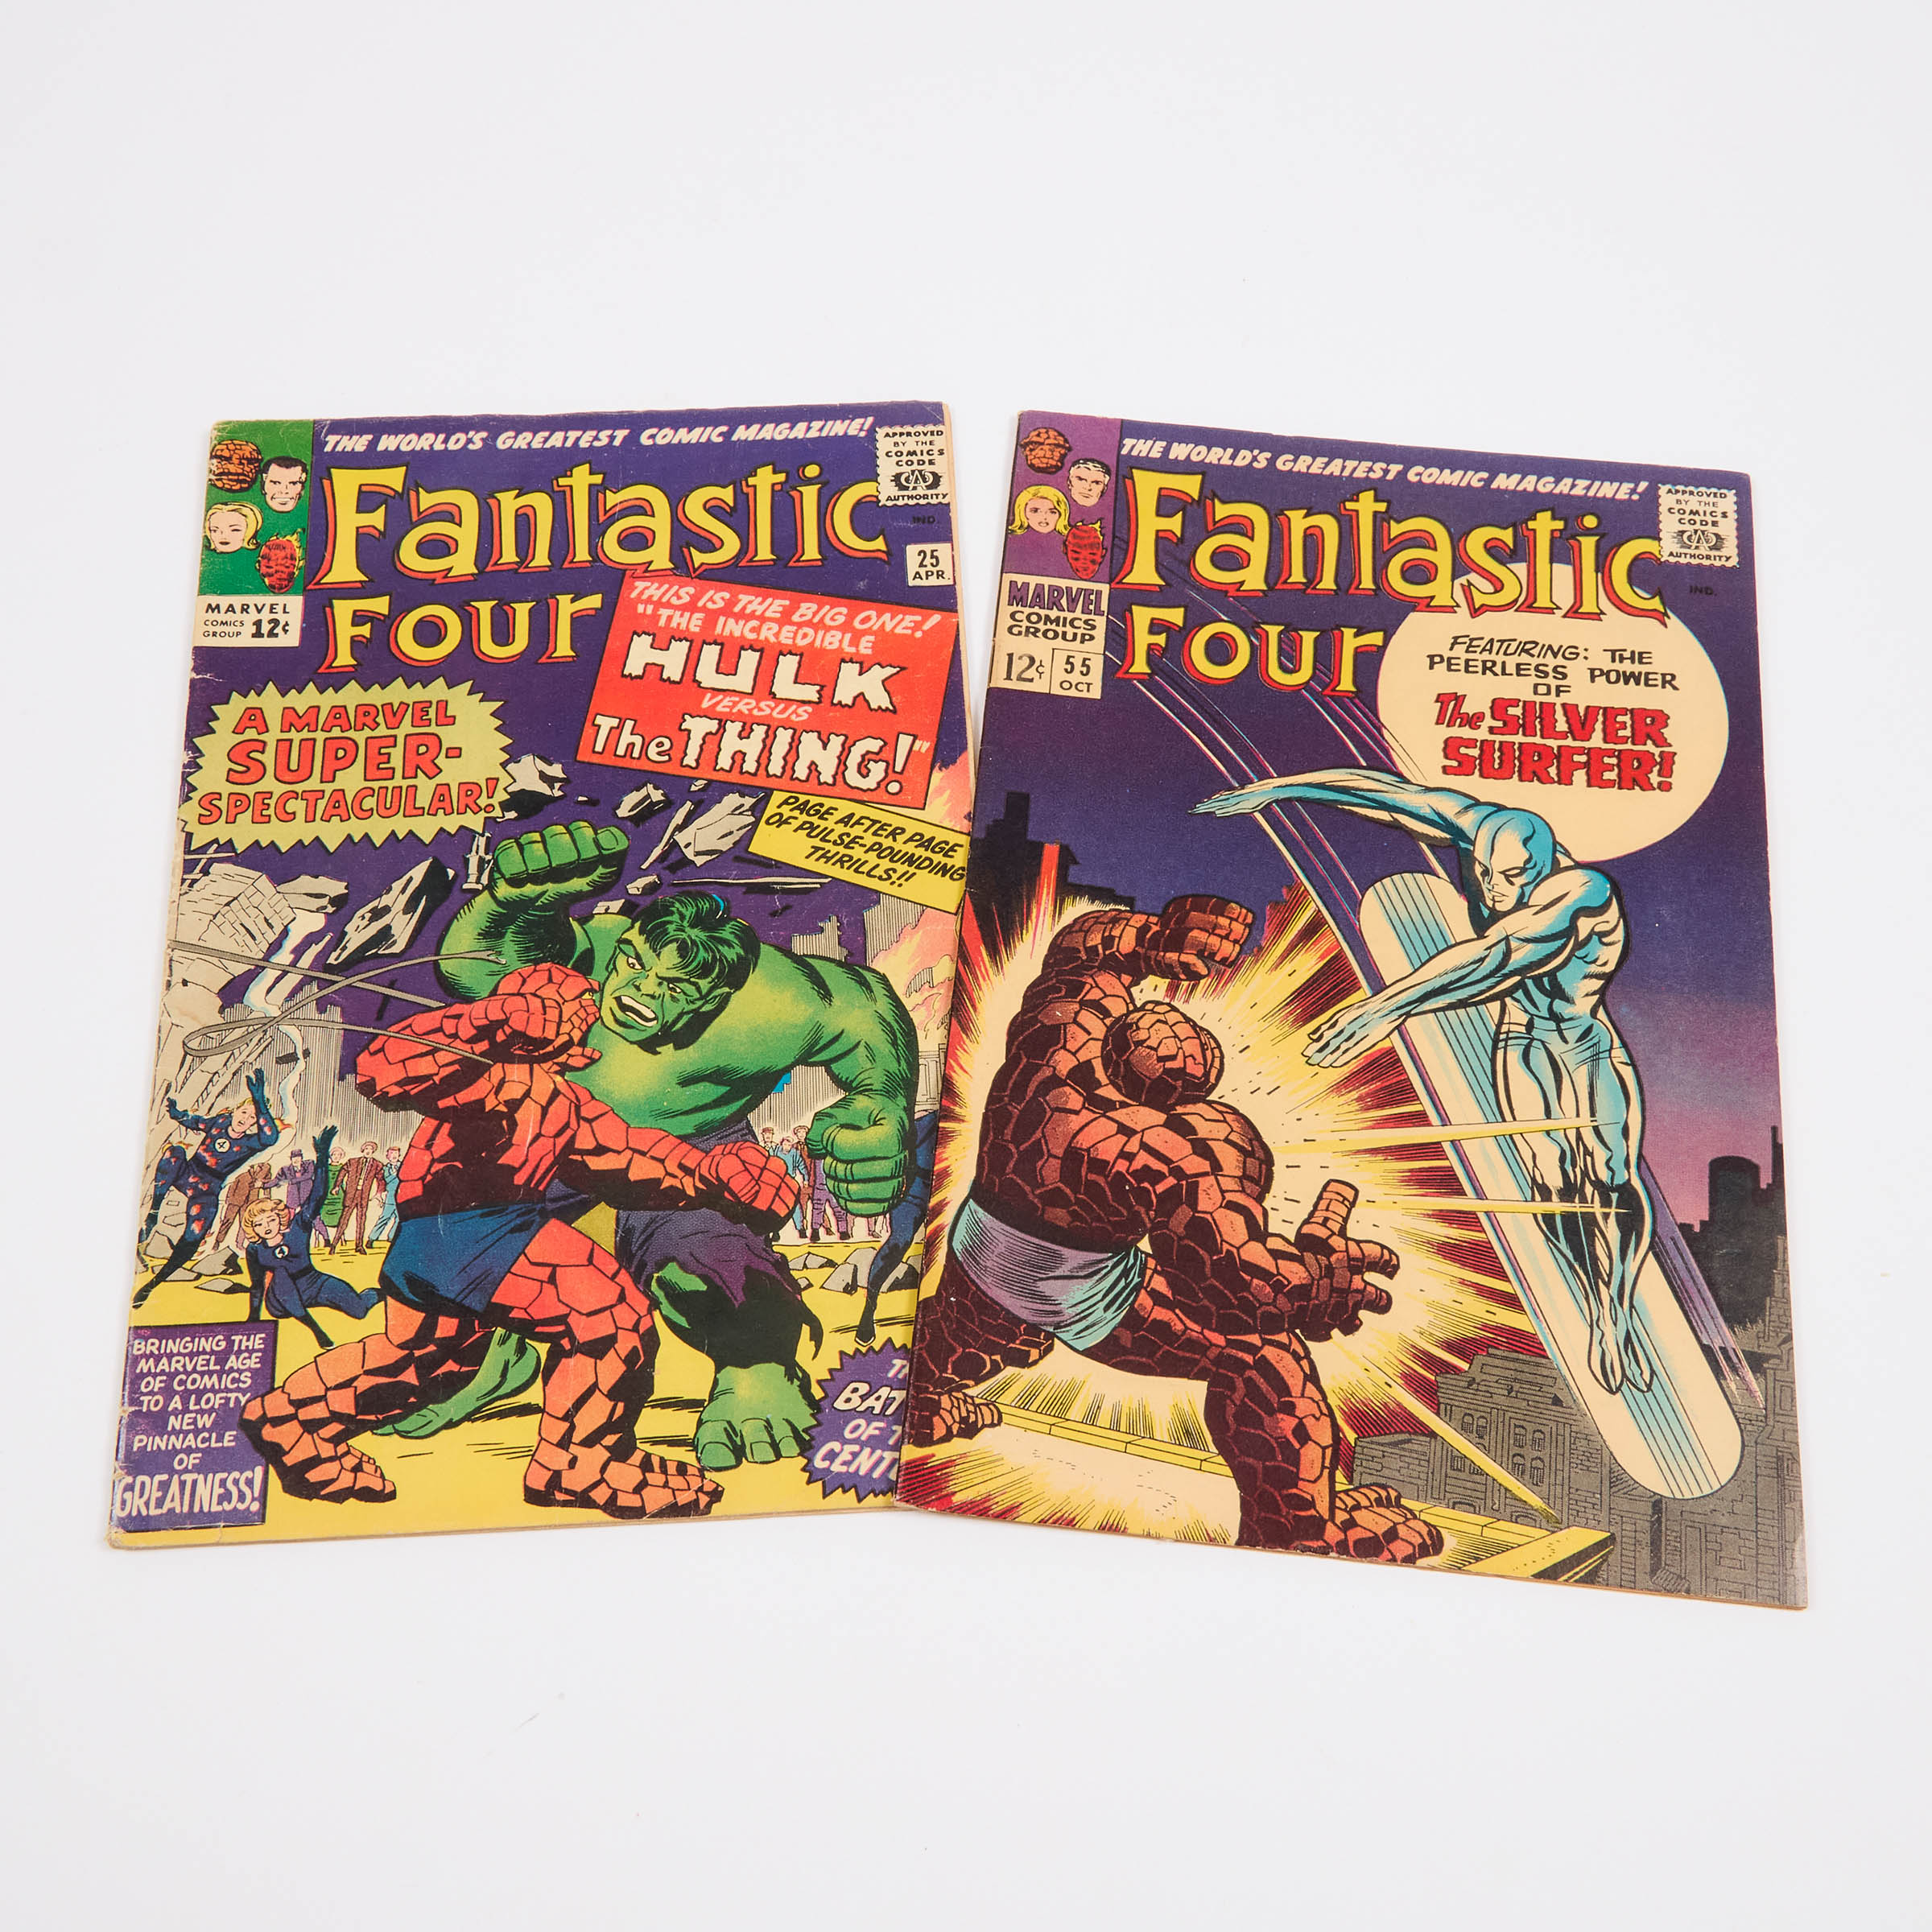 Two Marvel Comics: Fantastic Four